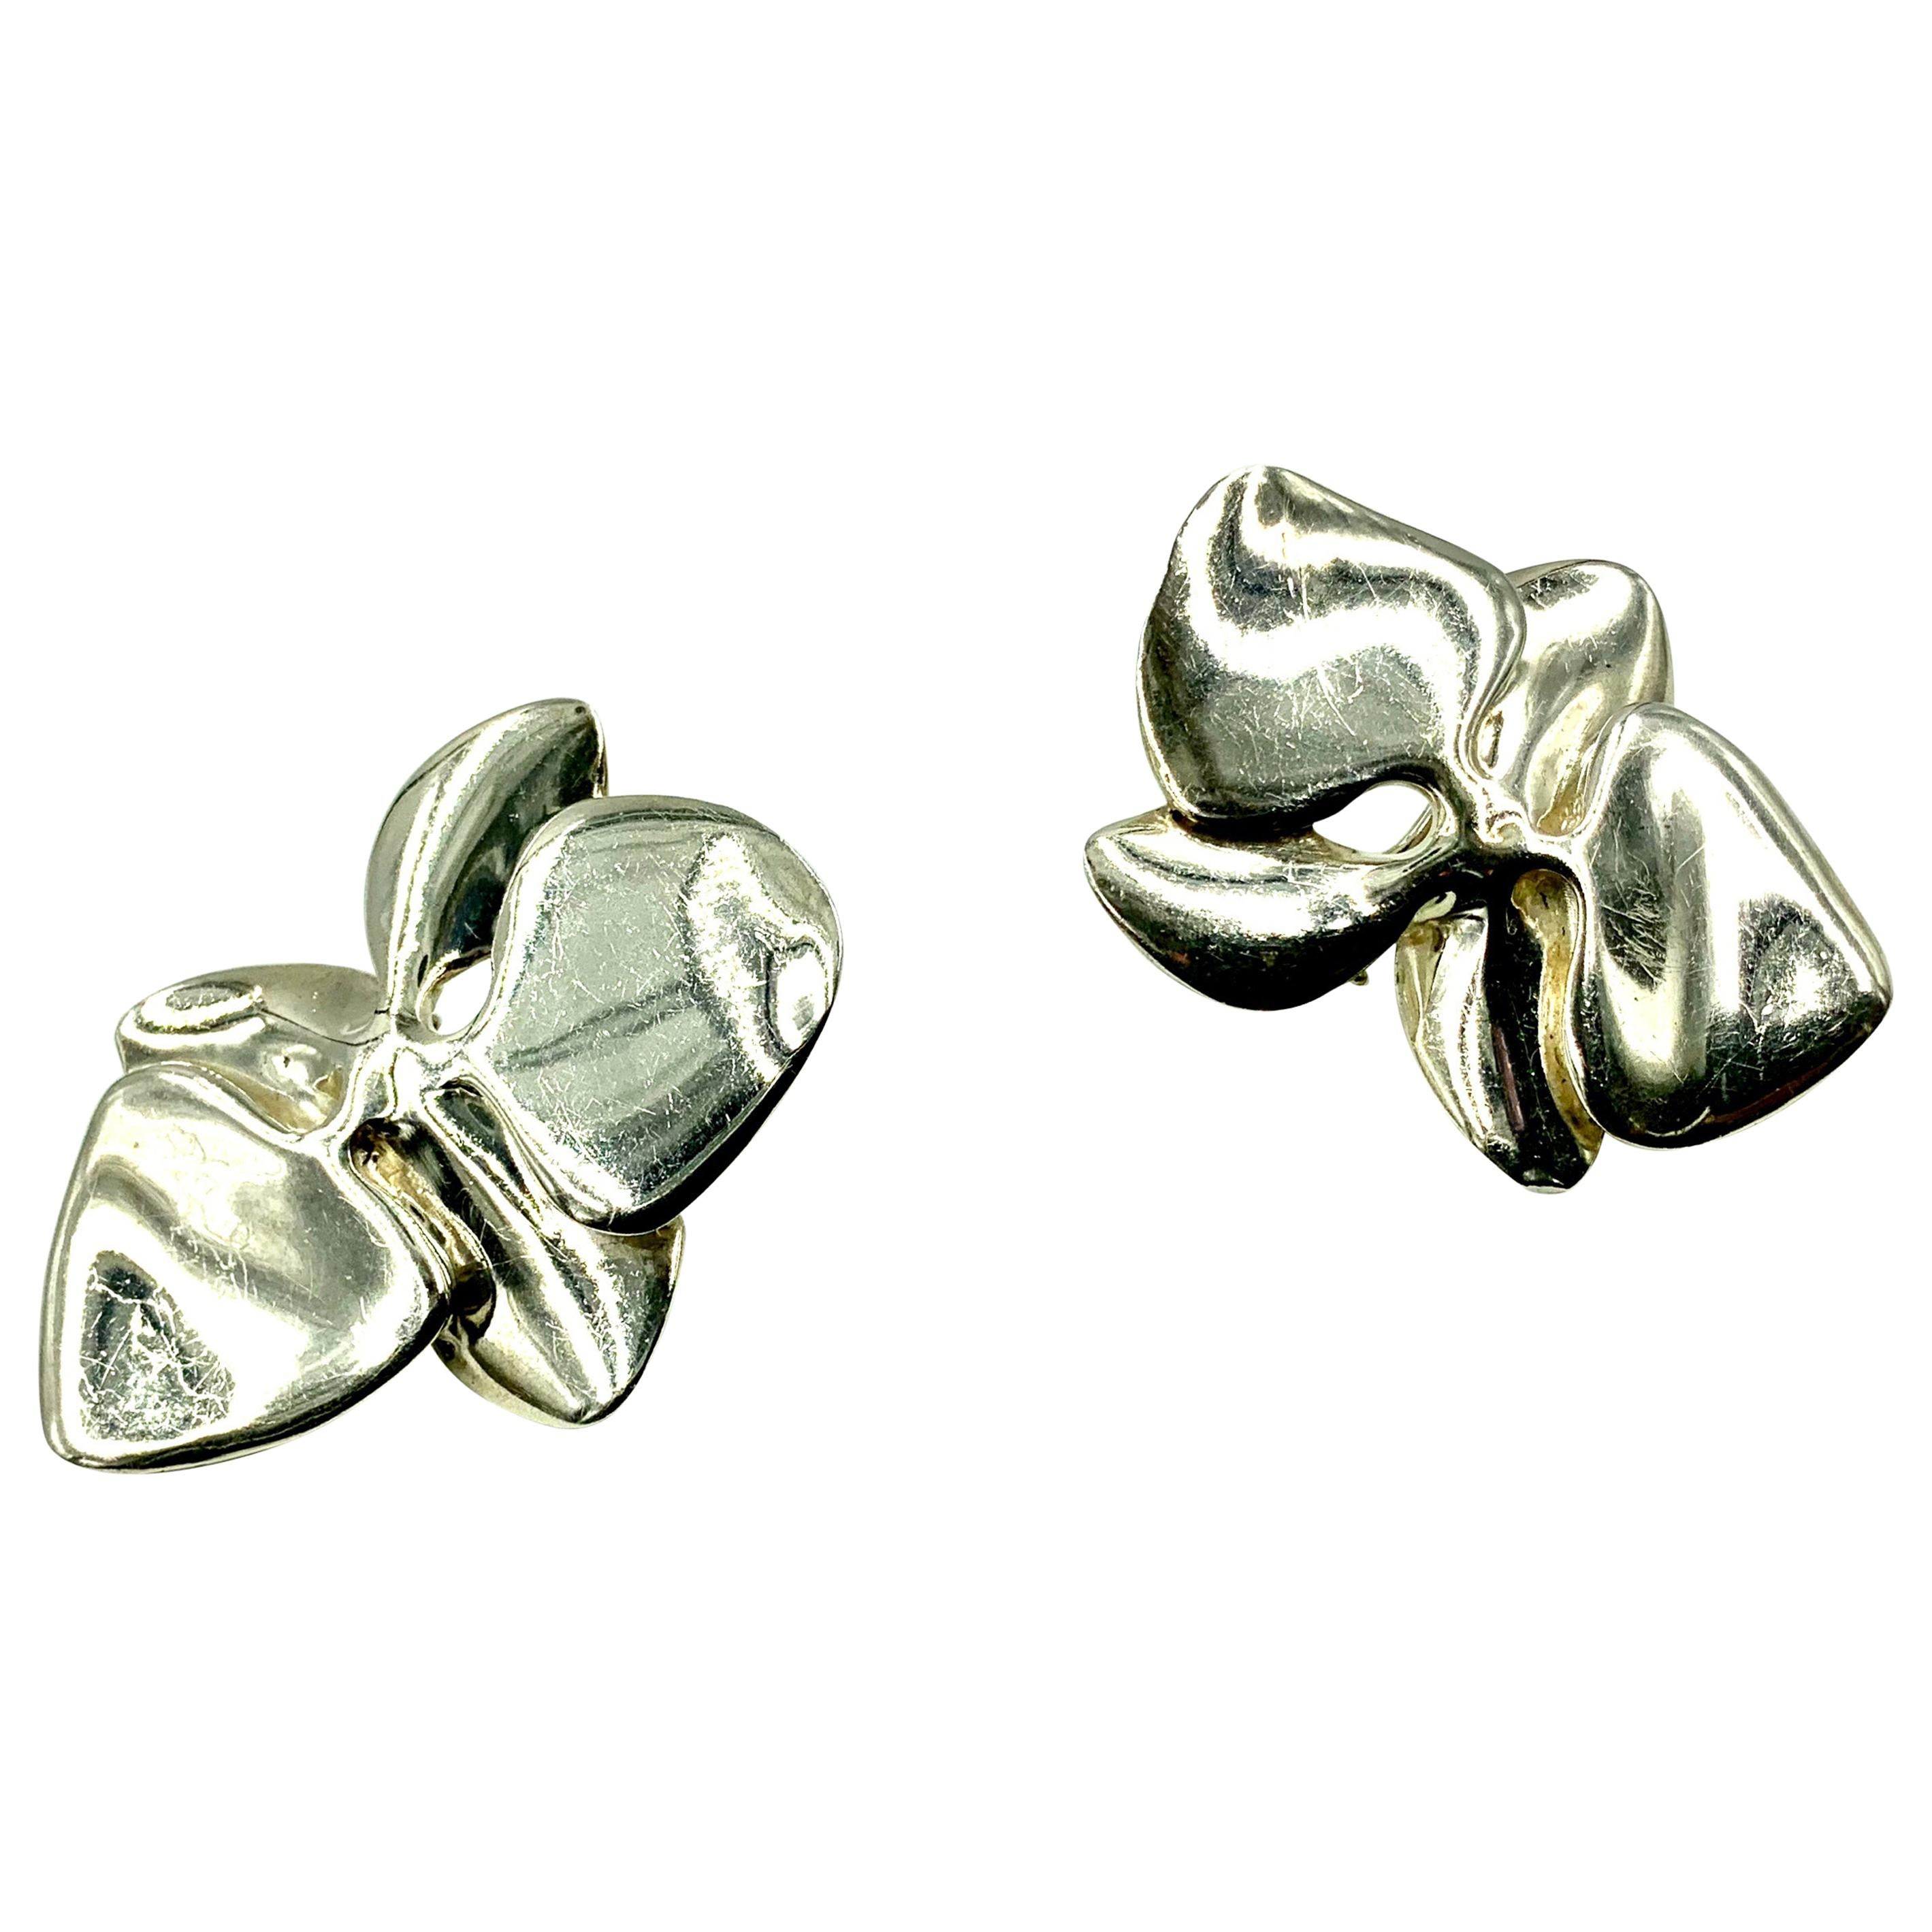 Angela Cummings Iconic 1984 Orchid Earrings in Sterling Silver